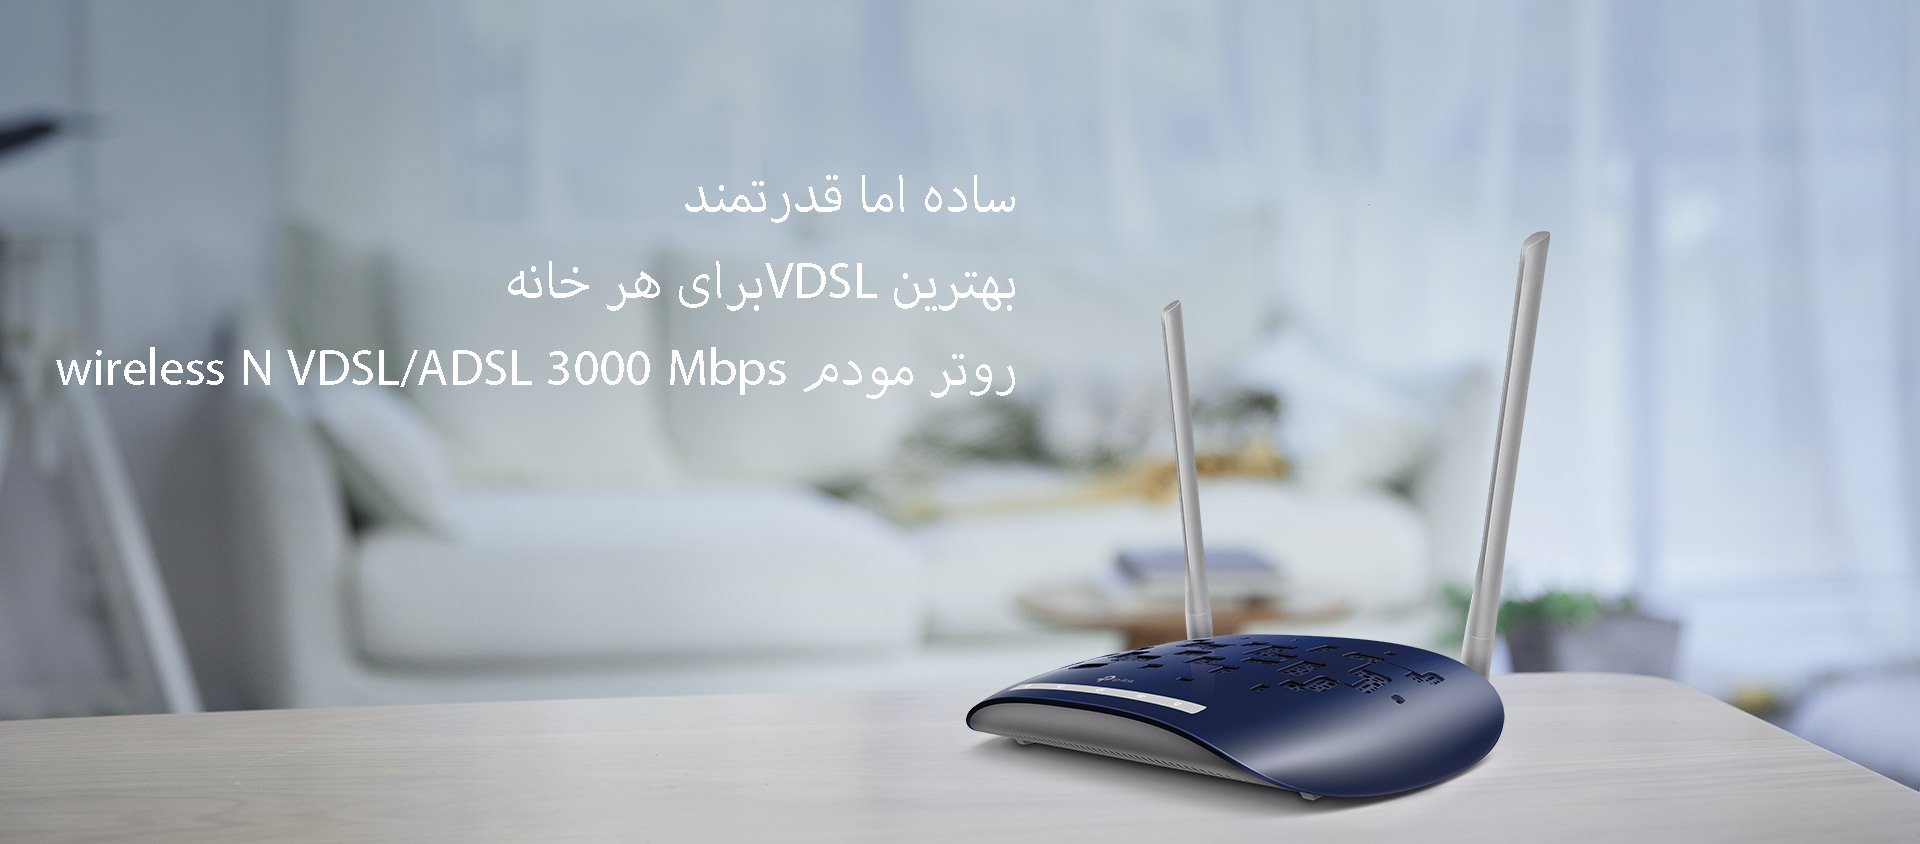 خرید و قیمت مودم VDSL/ADSL وایرلس N300 تی پی لینک مدل TD-W9960 | مودم 9960